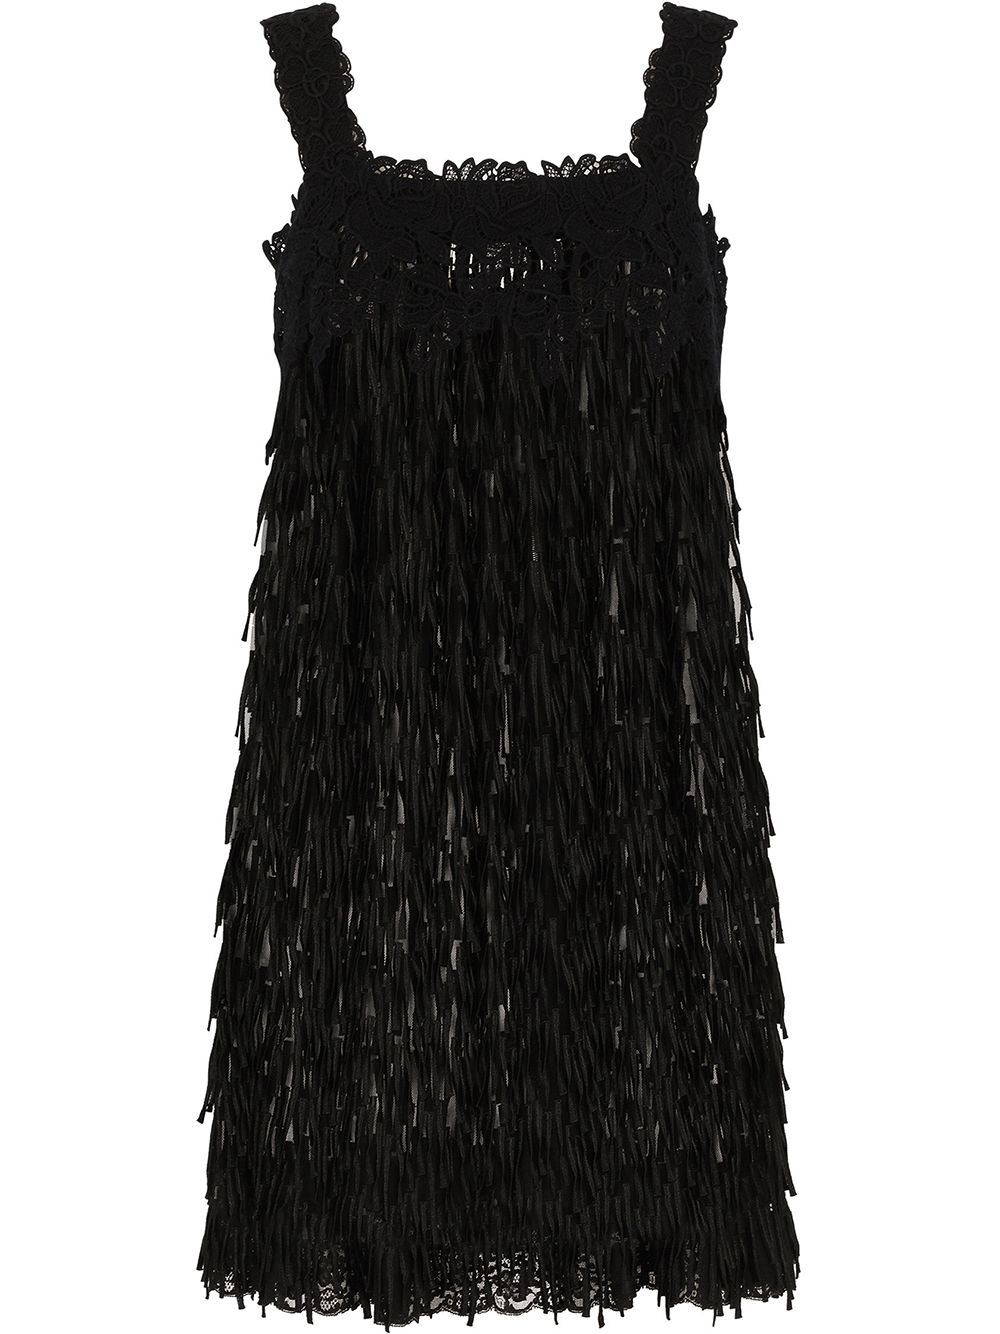 Dolce & Gabbana Sleeveless Sheer Fringed Dress - Farfetch